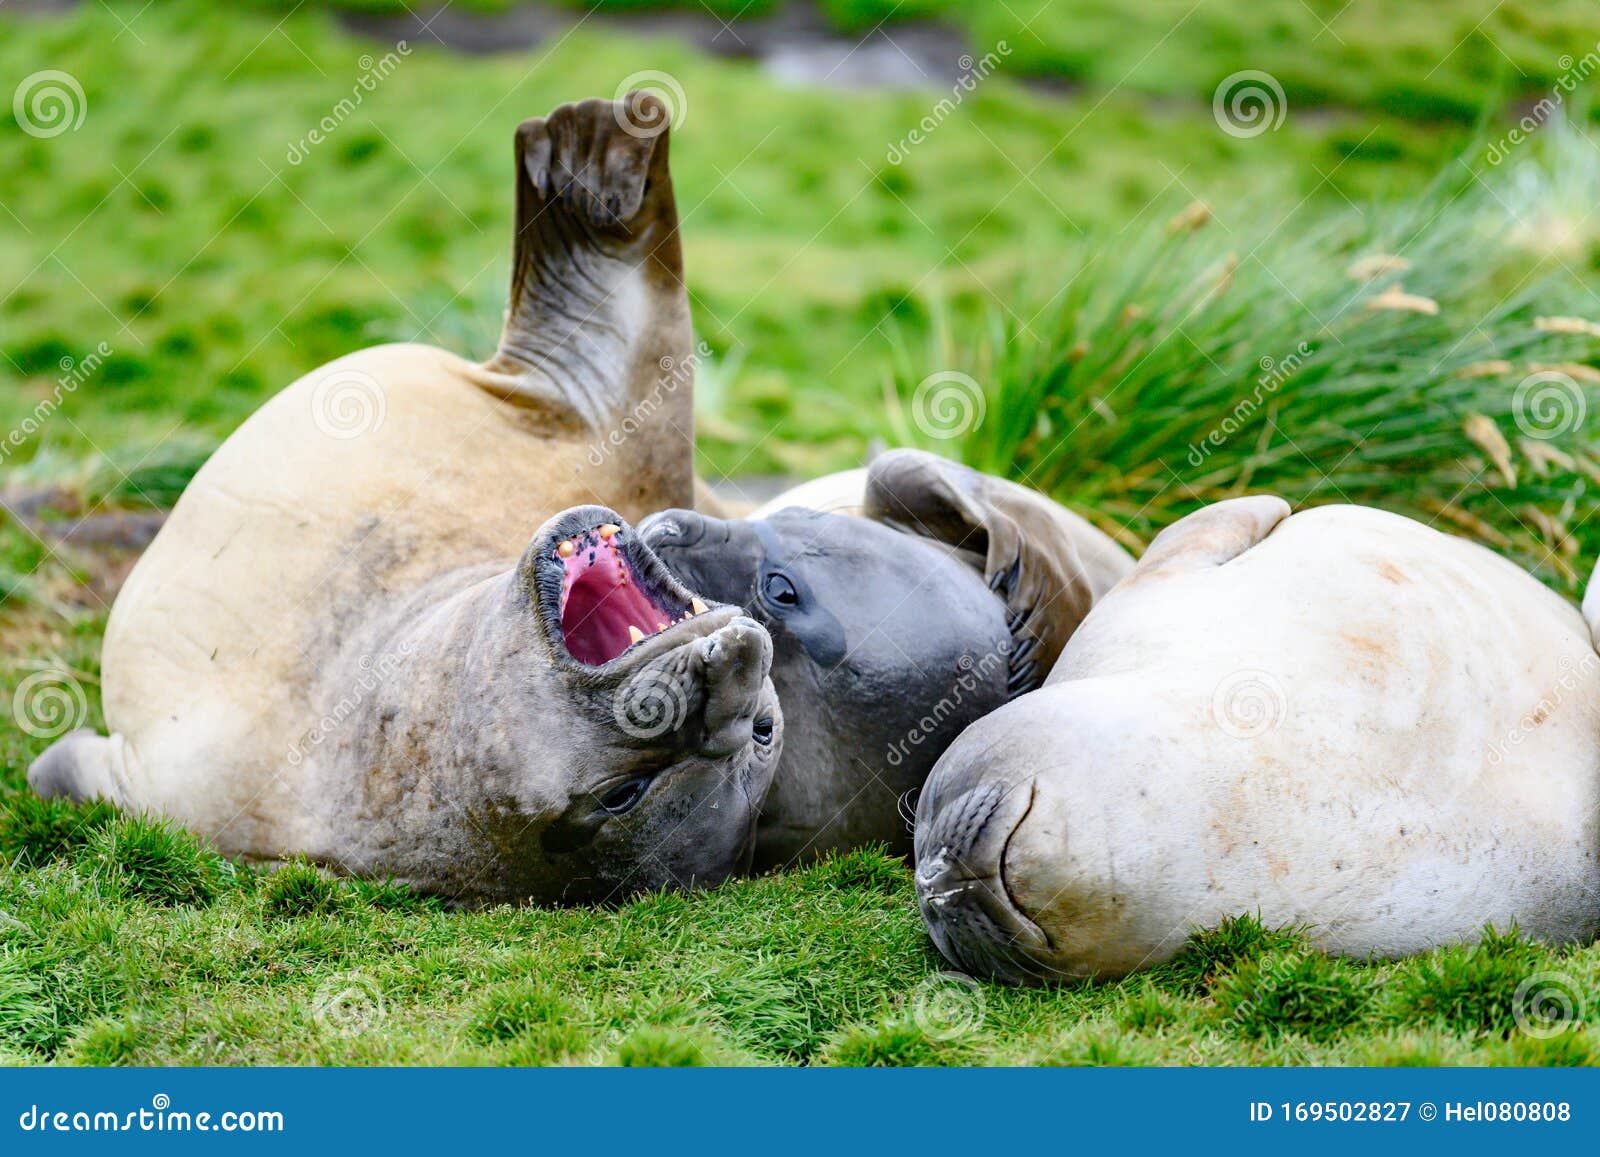 gigantic elephant seals - mirounga leonina - snuggling on meadow, grytviken,  south georgia